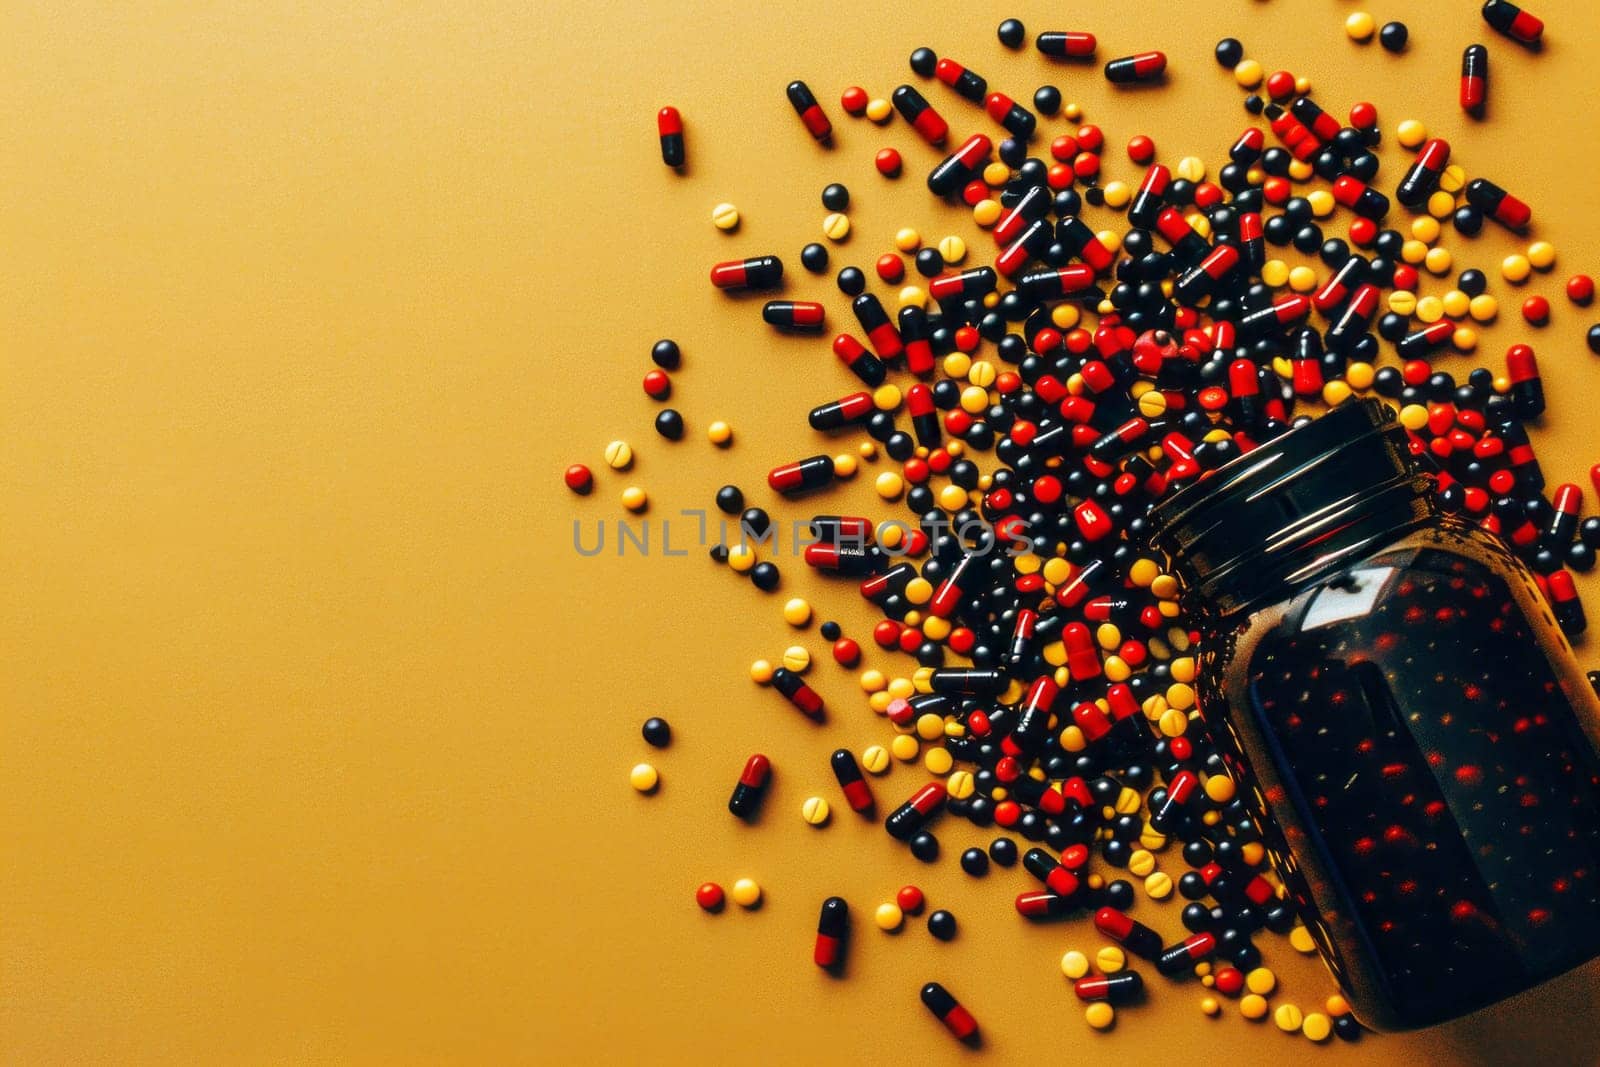 Medicine pills spilled from plastic pill bottle, on orange background. Medicine creative concepts by NataliPopova